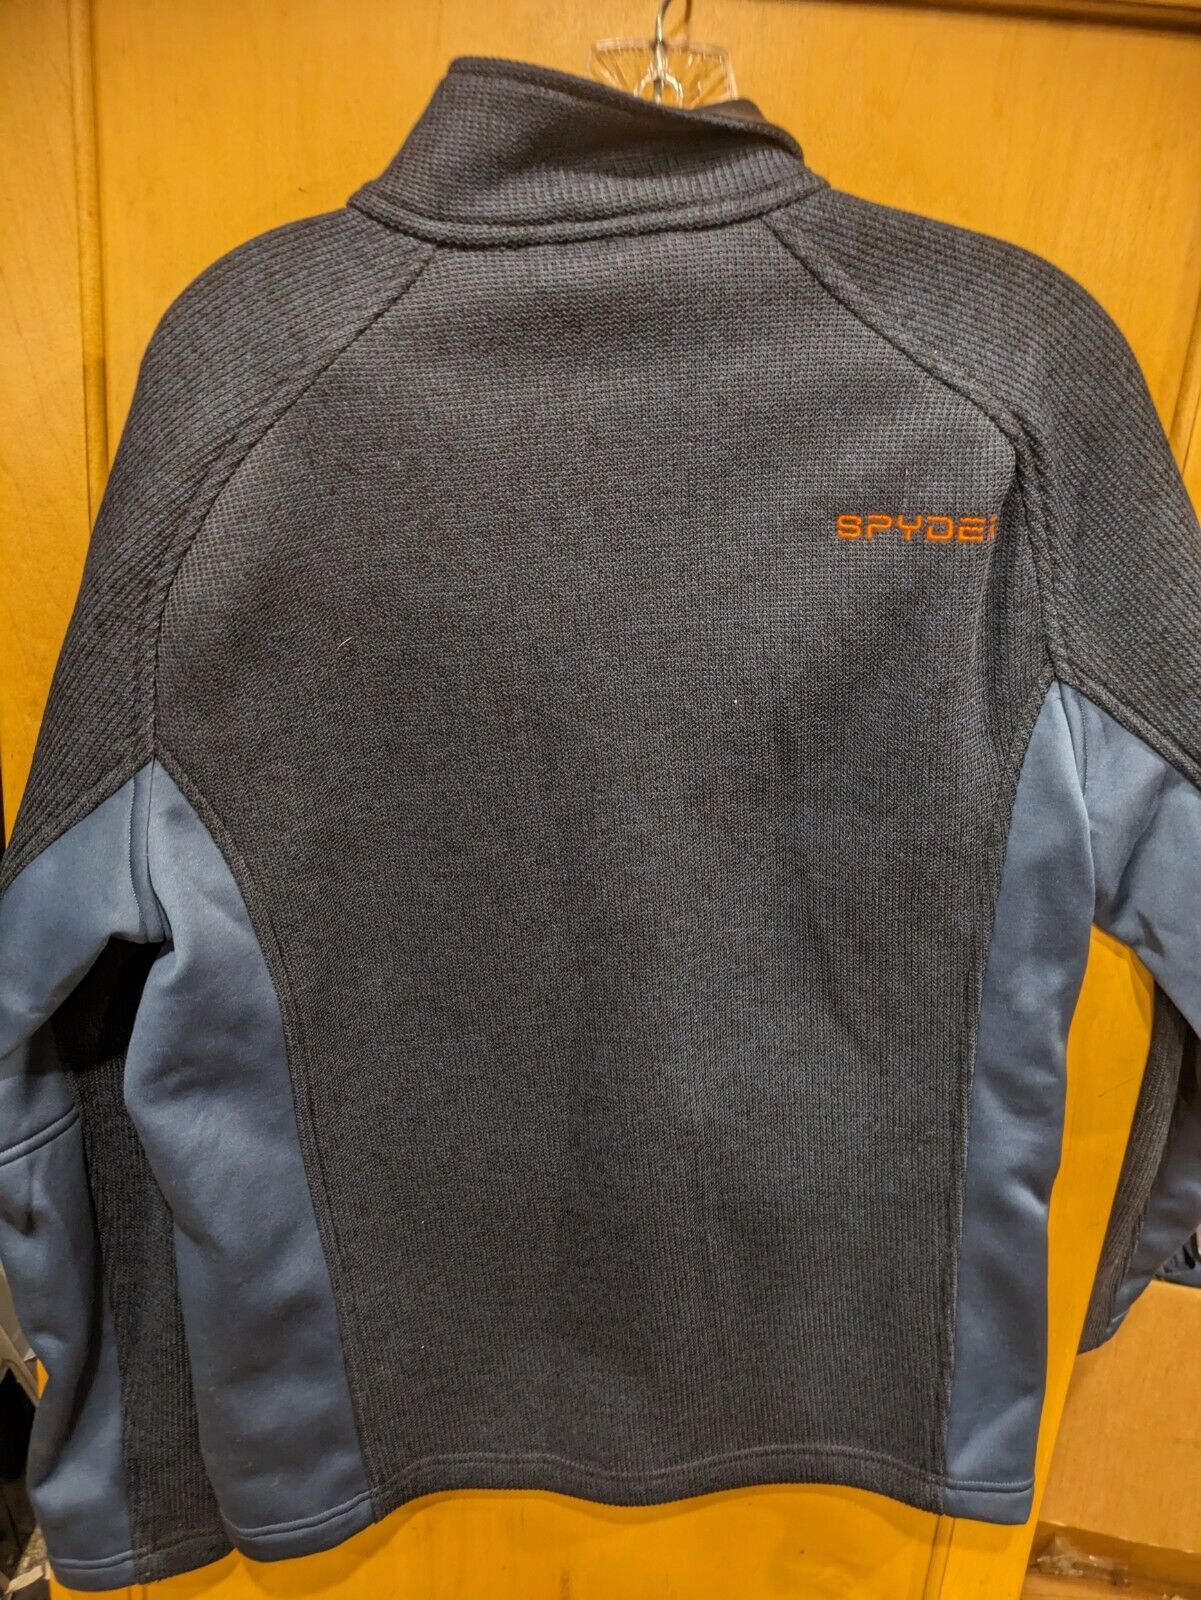 SPYDER Outbound Pullover Core fleece Mens Size Medium 1/4 Zip | eBay